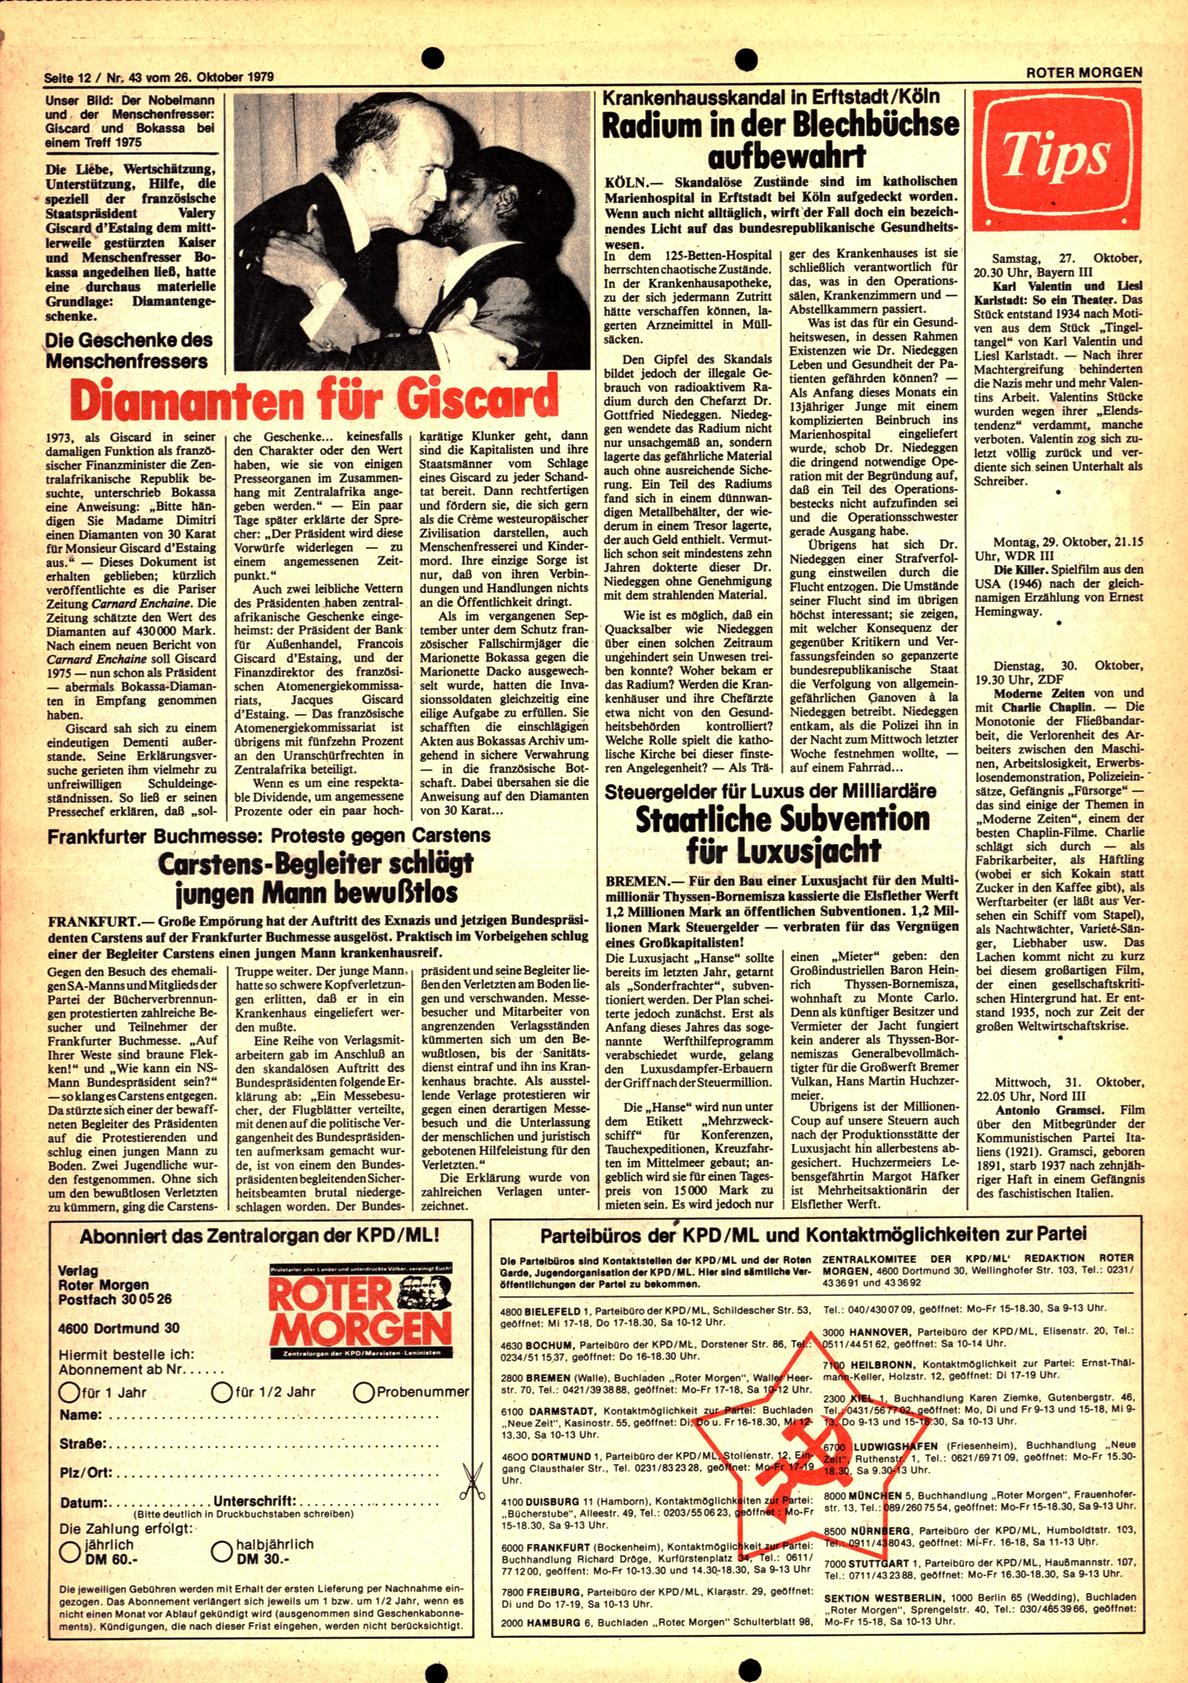 Roter Morgen, 13. Jg., 26. Oktober 1979, Nr. 43, Seite 12